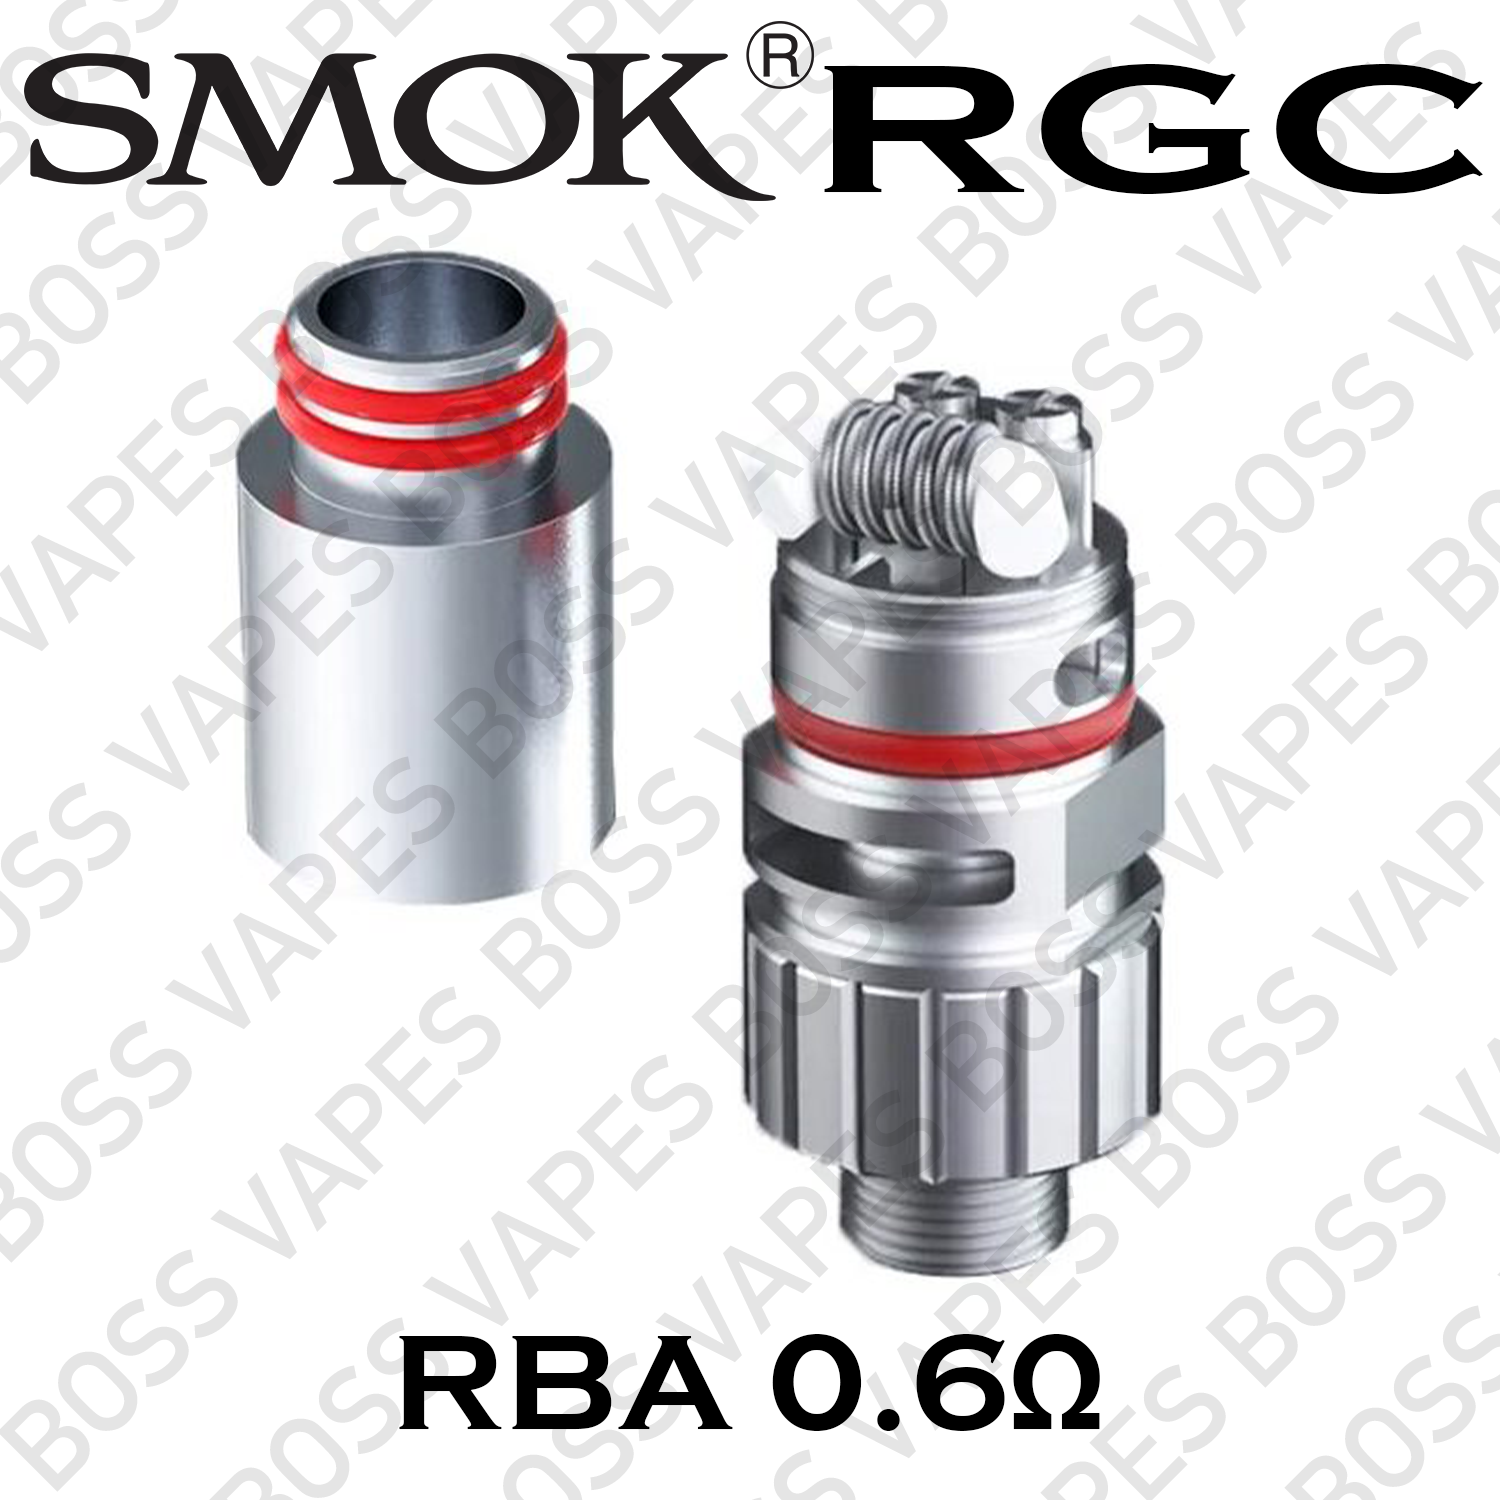 SMOK RGC RBA COIL (1 PACK) - Boss Vapes